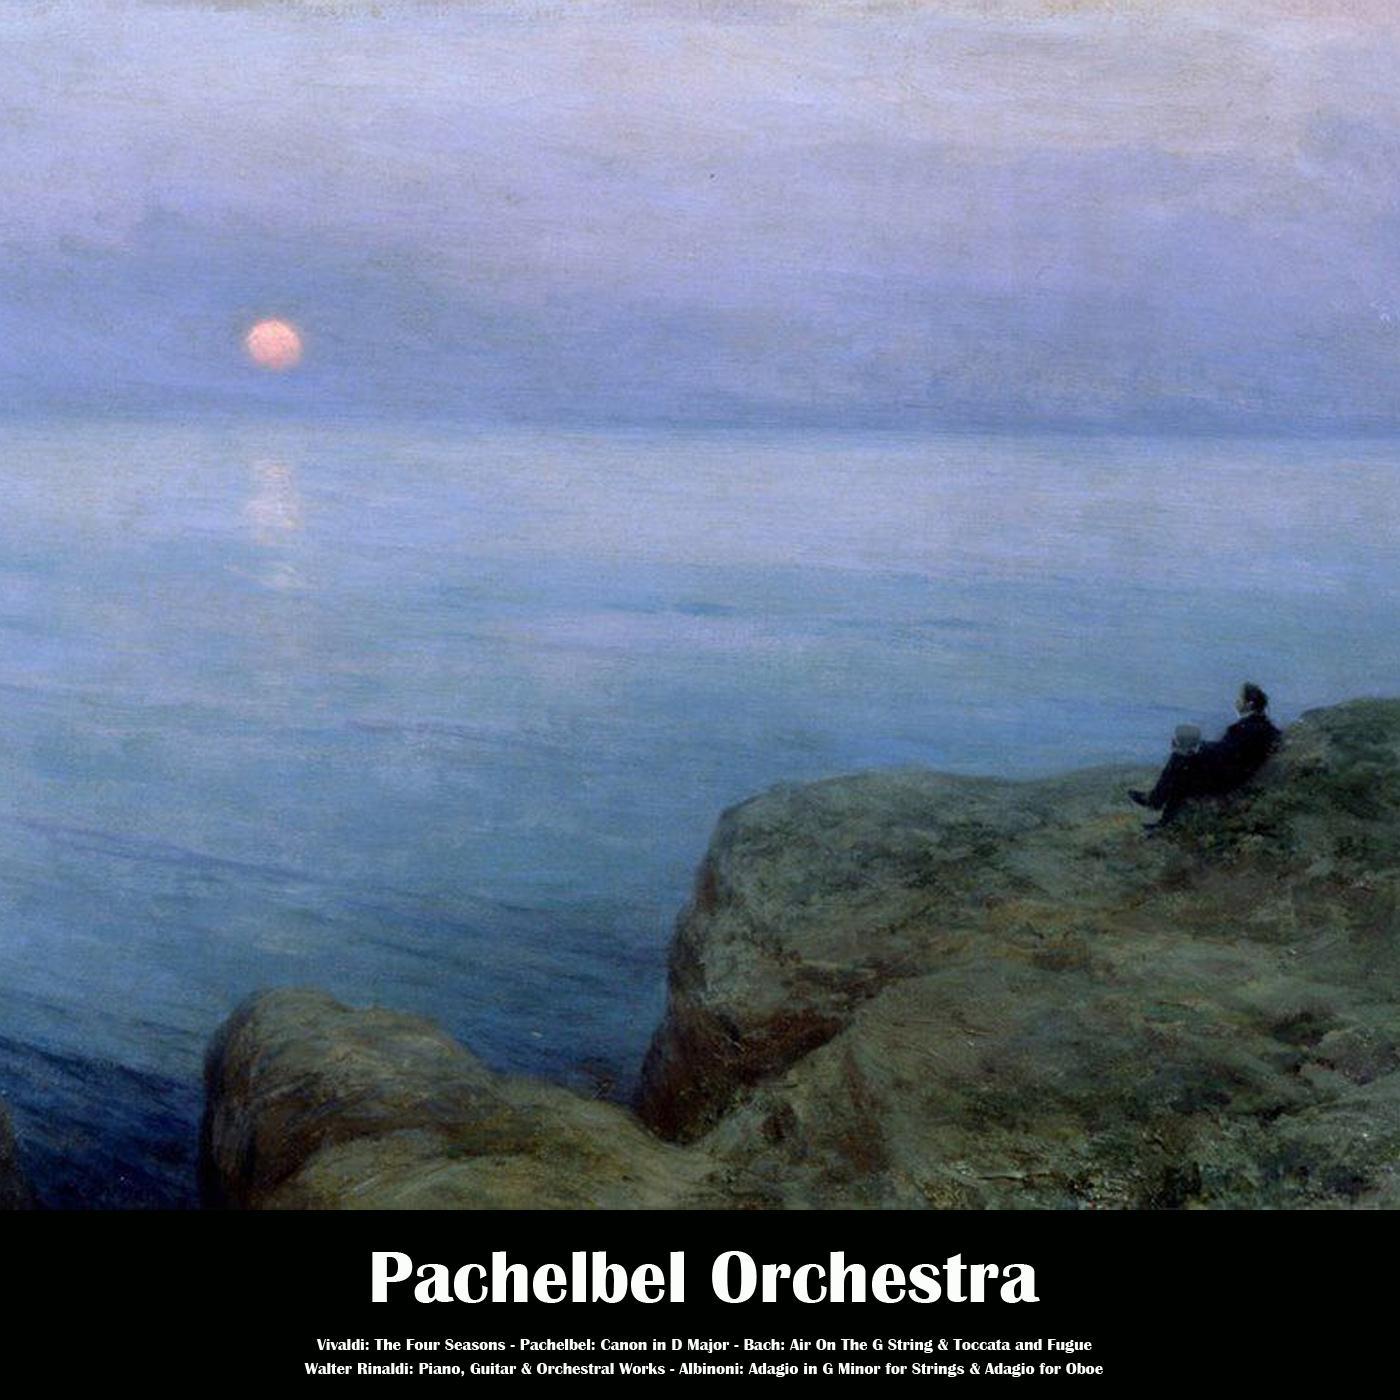 Pachelbel Orchestra - The Four Seasons, Concerto for Violin, Strings and Continuo in G Minor, No. 2, Op. 8, Rv 315, “l’ Estate” (Summer): III. Presto